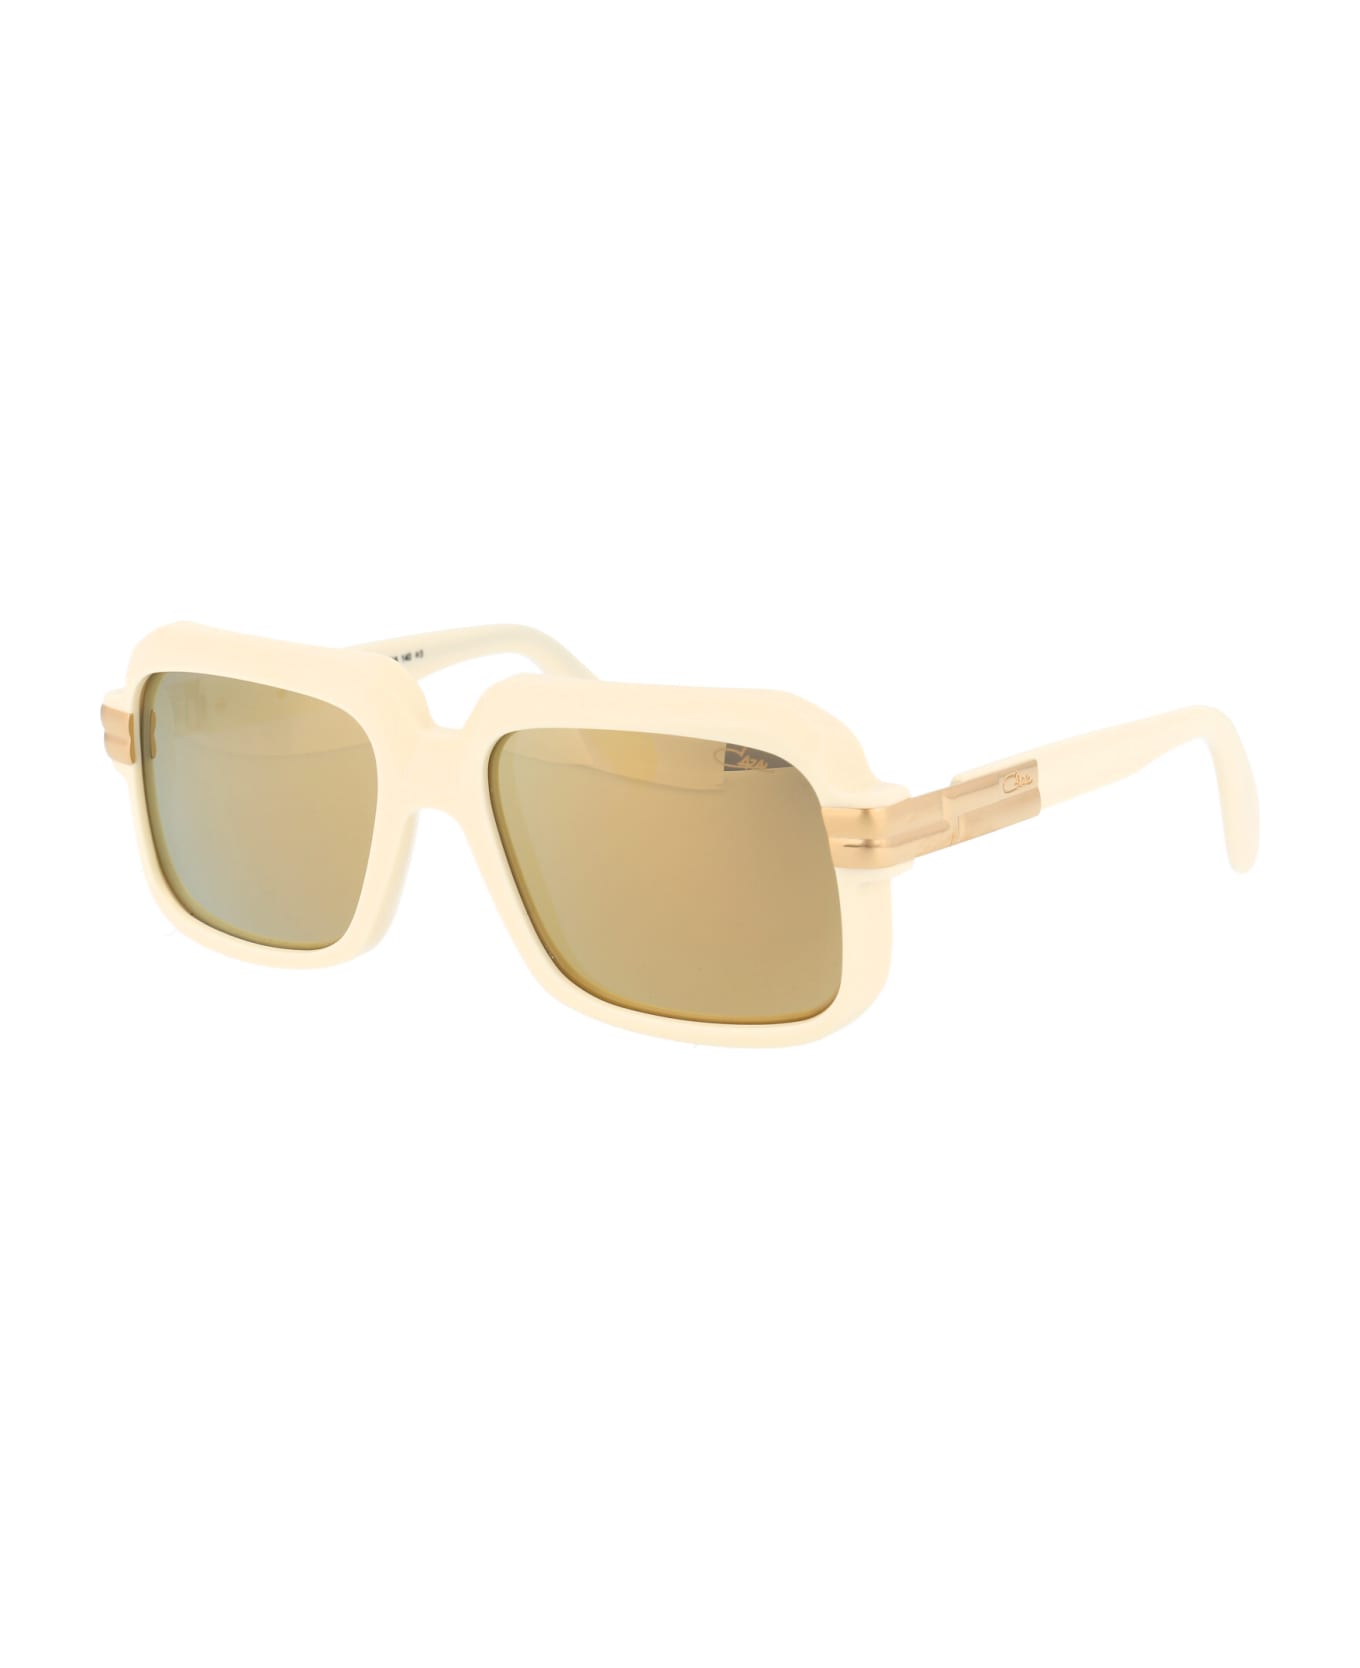 Cazal Mod. 607/3 Sunglasses - 007 IVORY